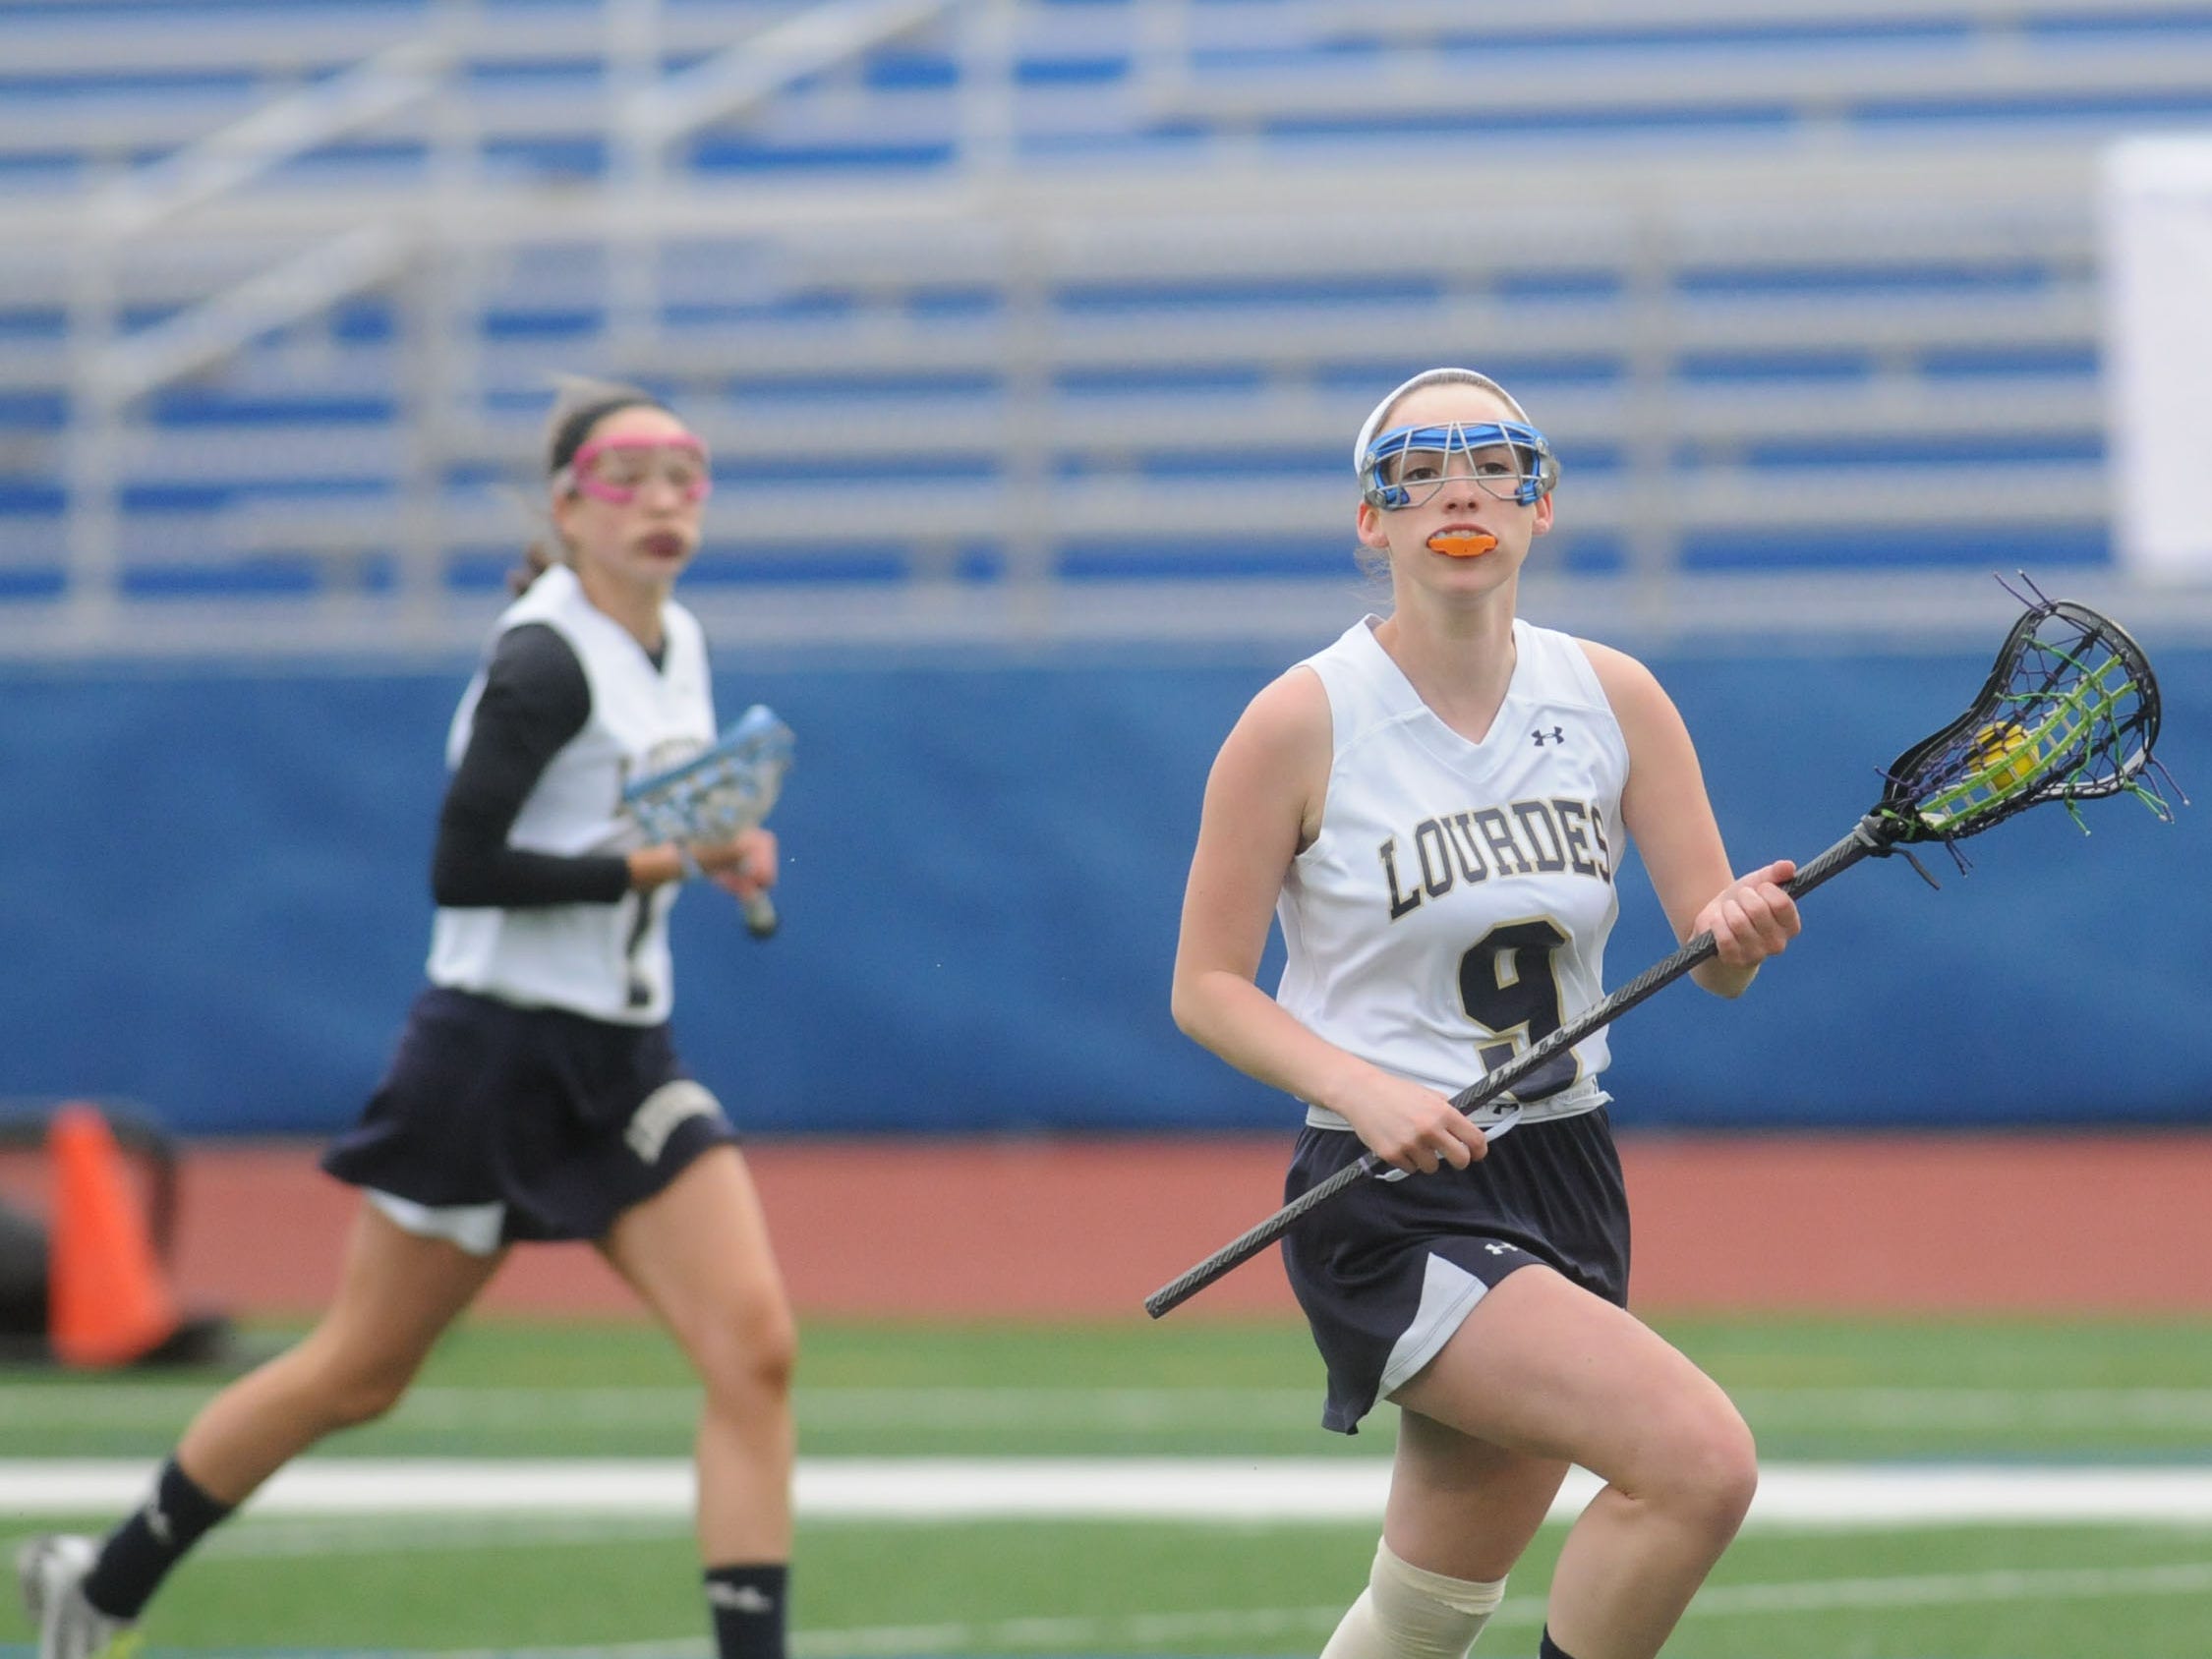 Girls lacrosse: Lourdes wins, looks ahead | USA TODAY High School Sports